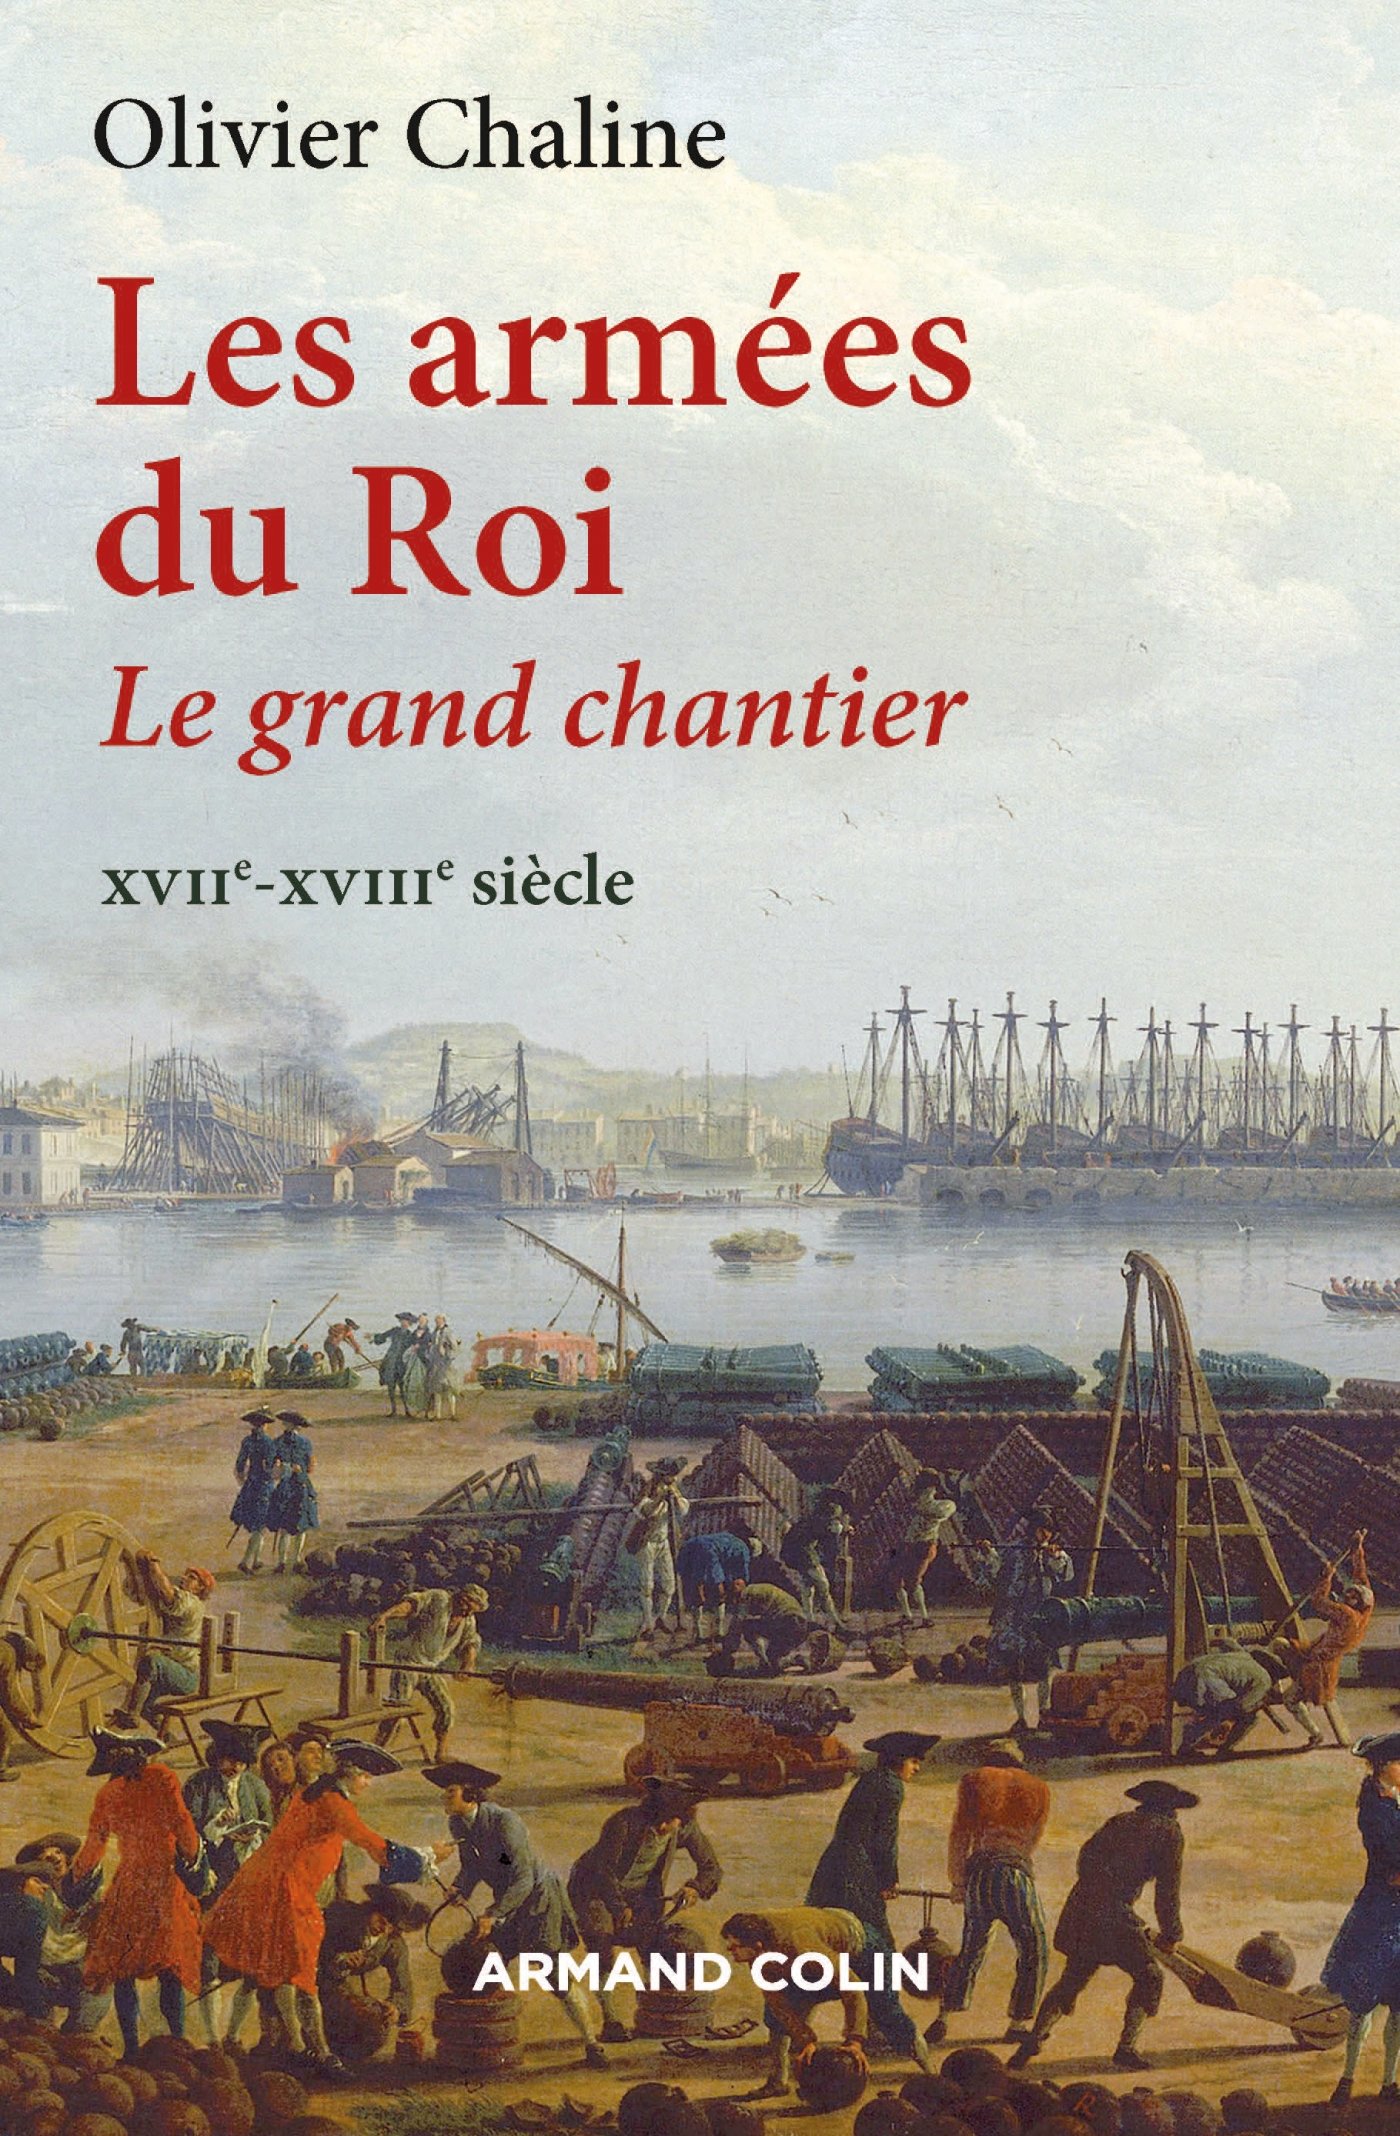 Les armées du Roi. Le grand chantier XVIIe-XVIIIe siècle, 2016, 352 p.